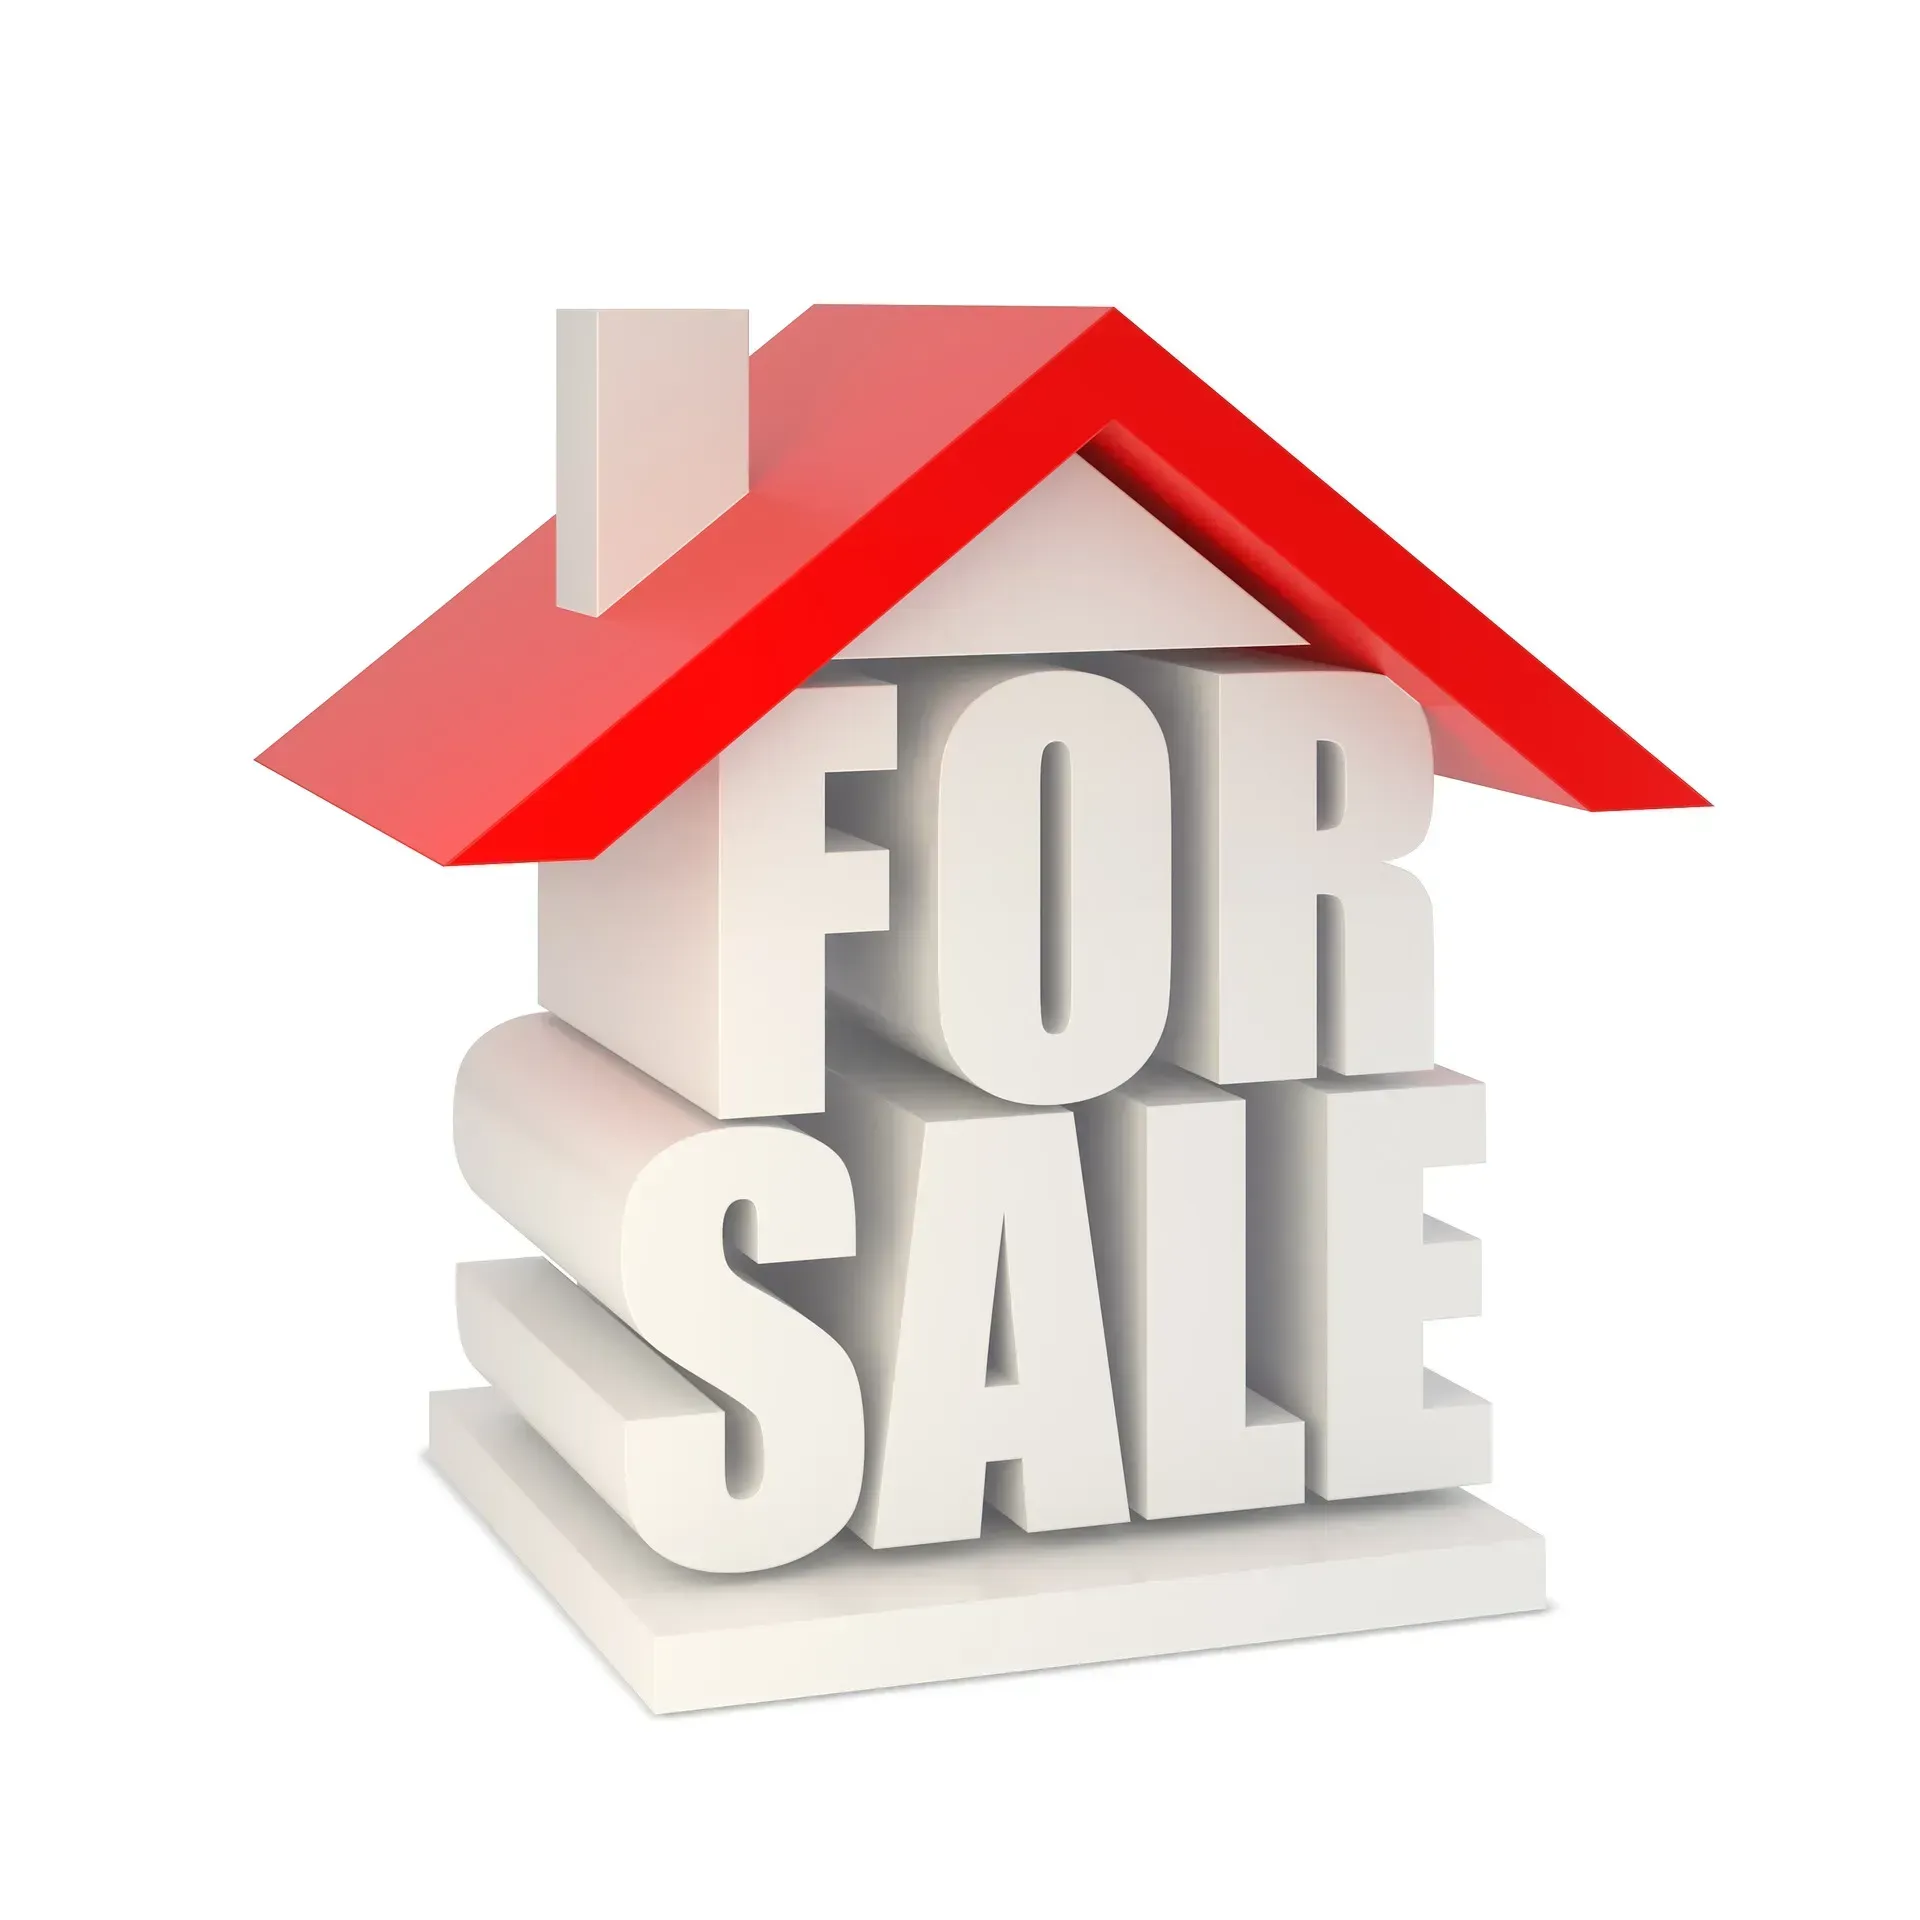 house-for-sale-gefa6367ad_1920.jpg